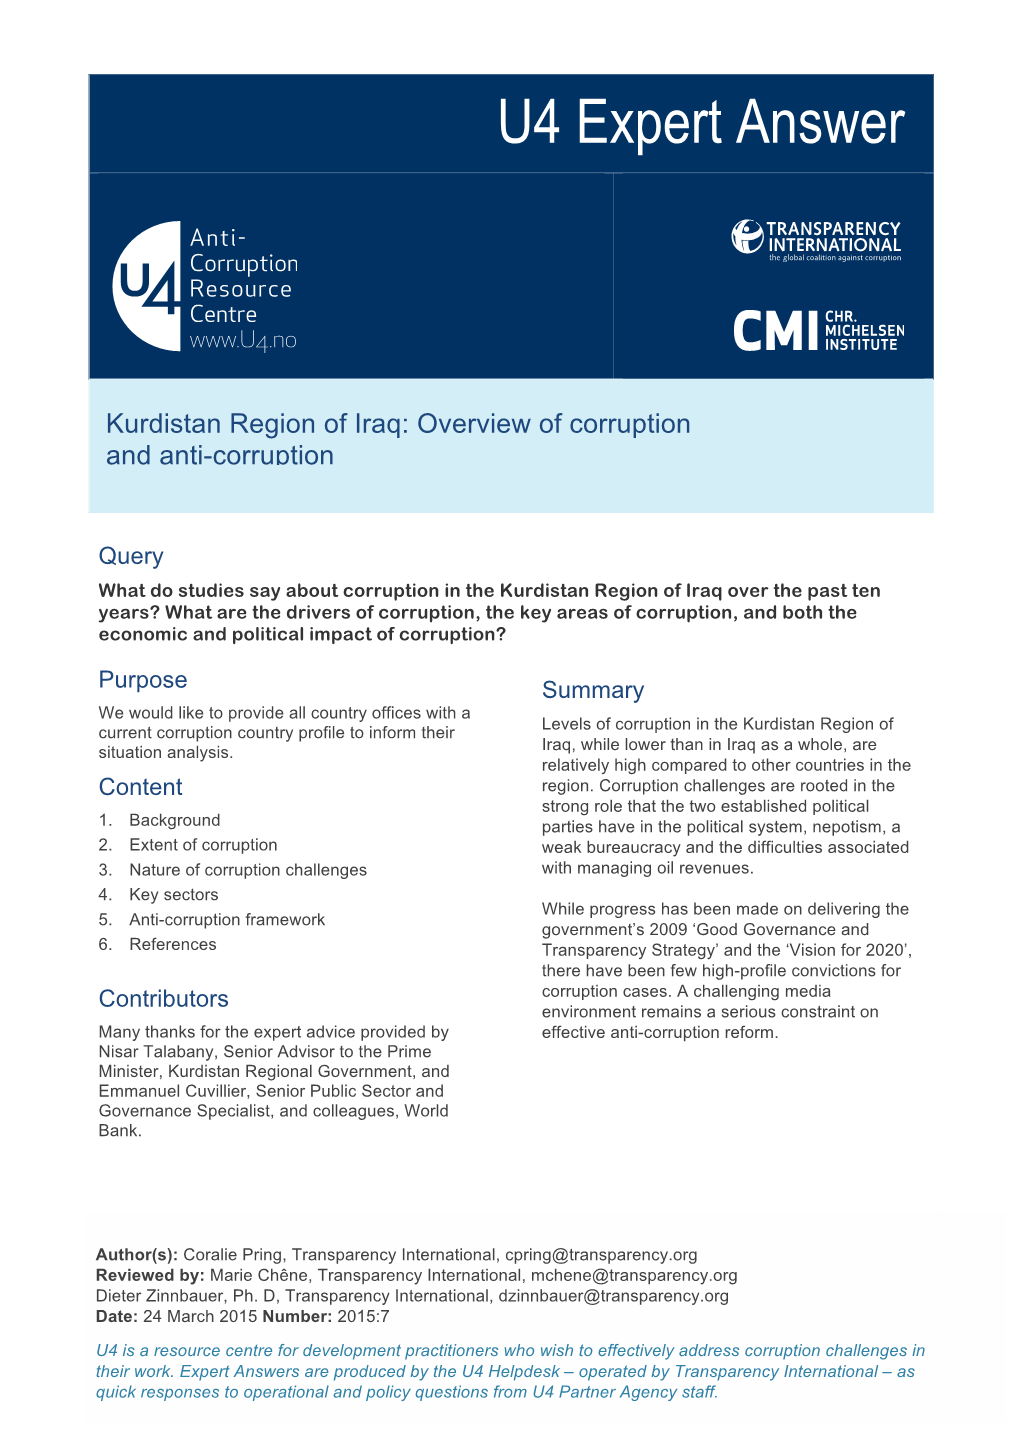 Kurdistan Region of Iraq: Overview of Corruption and Anti-Corruption